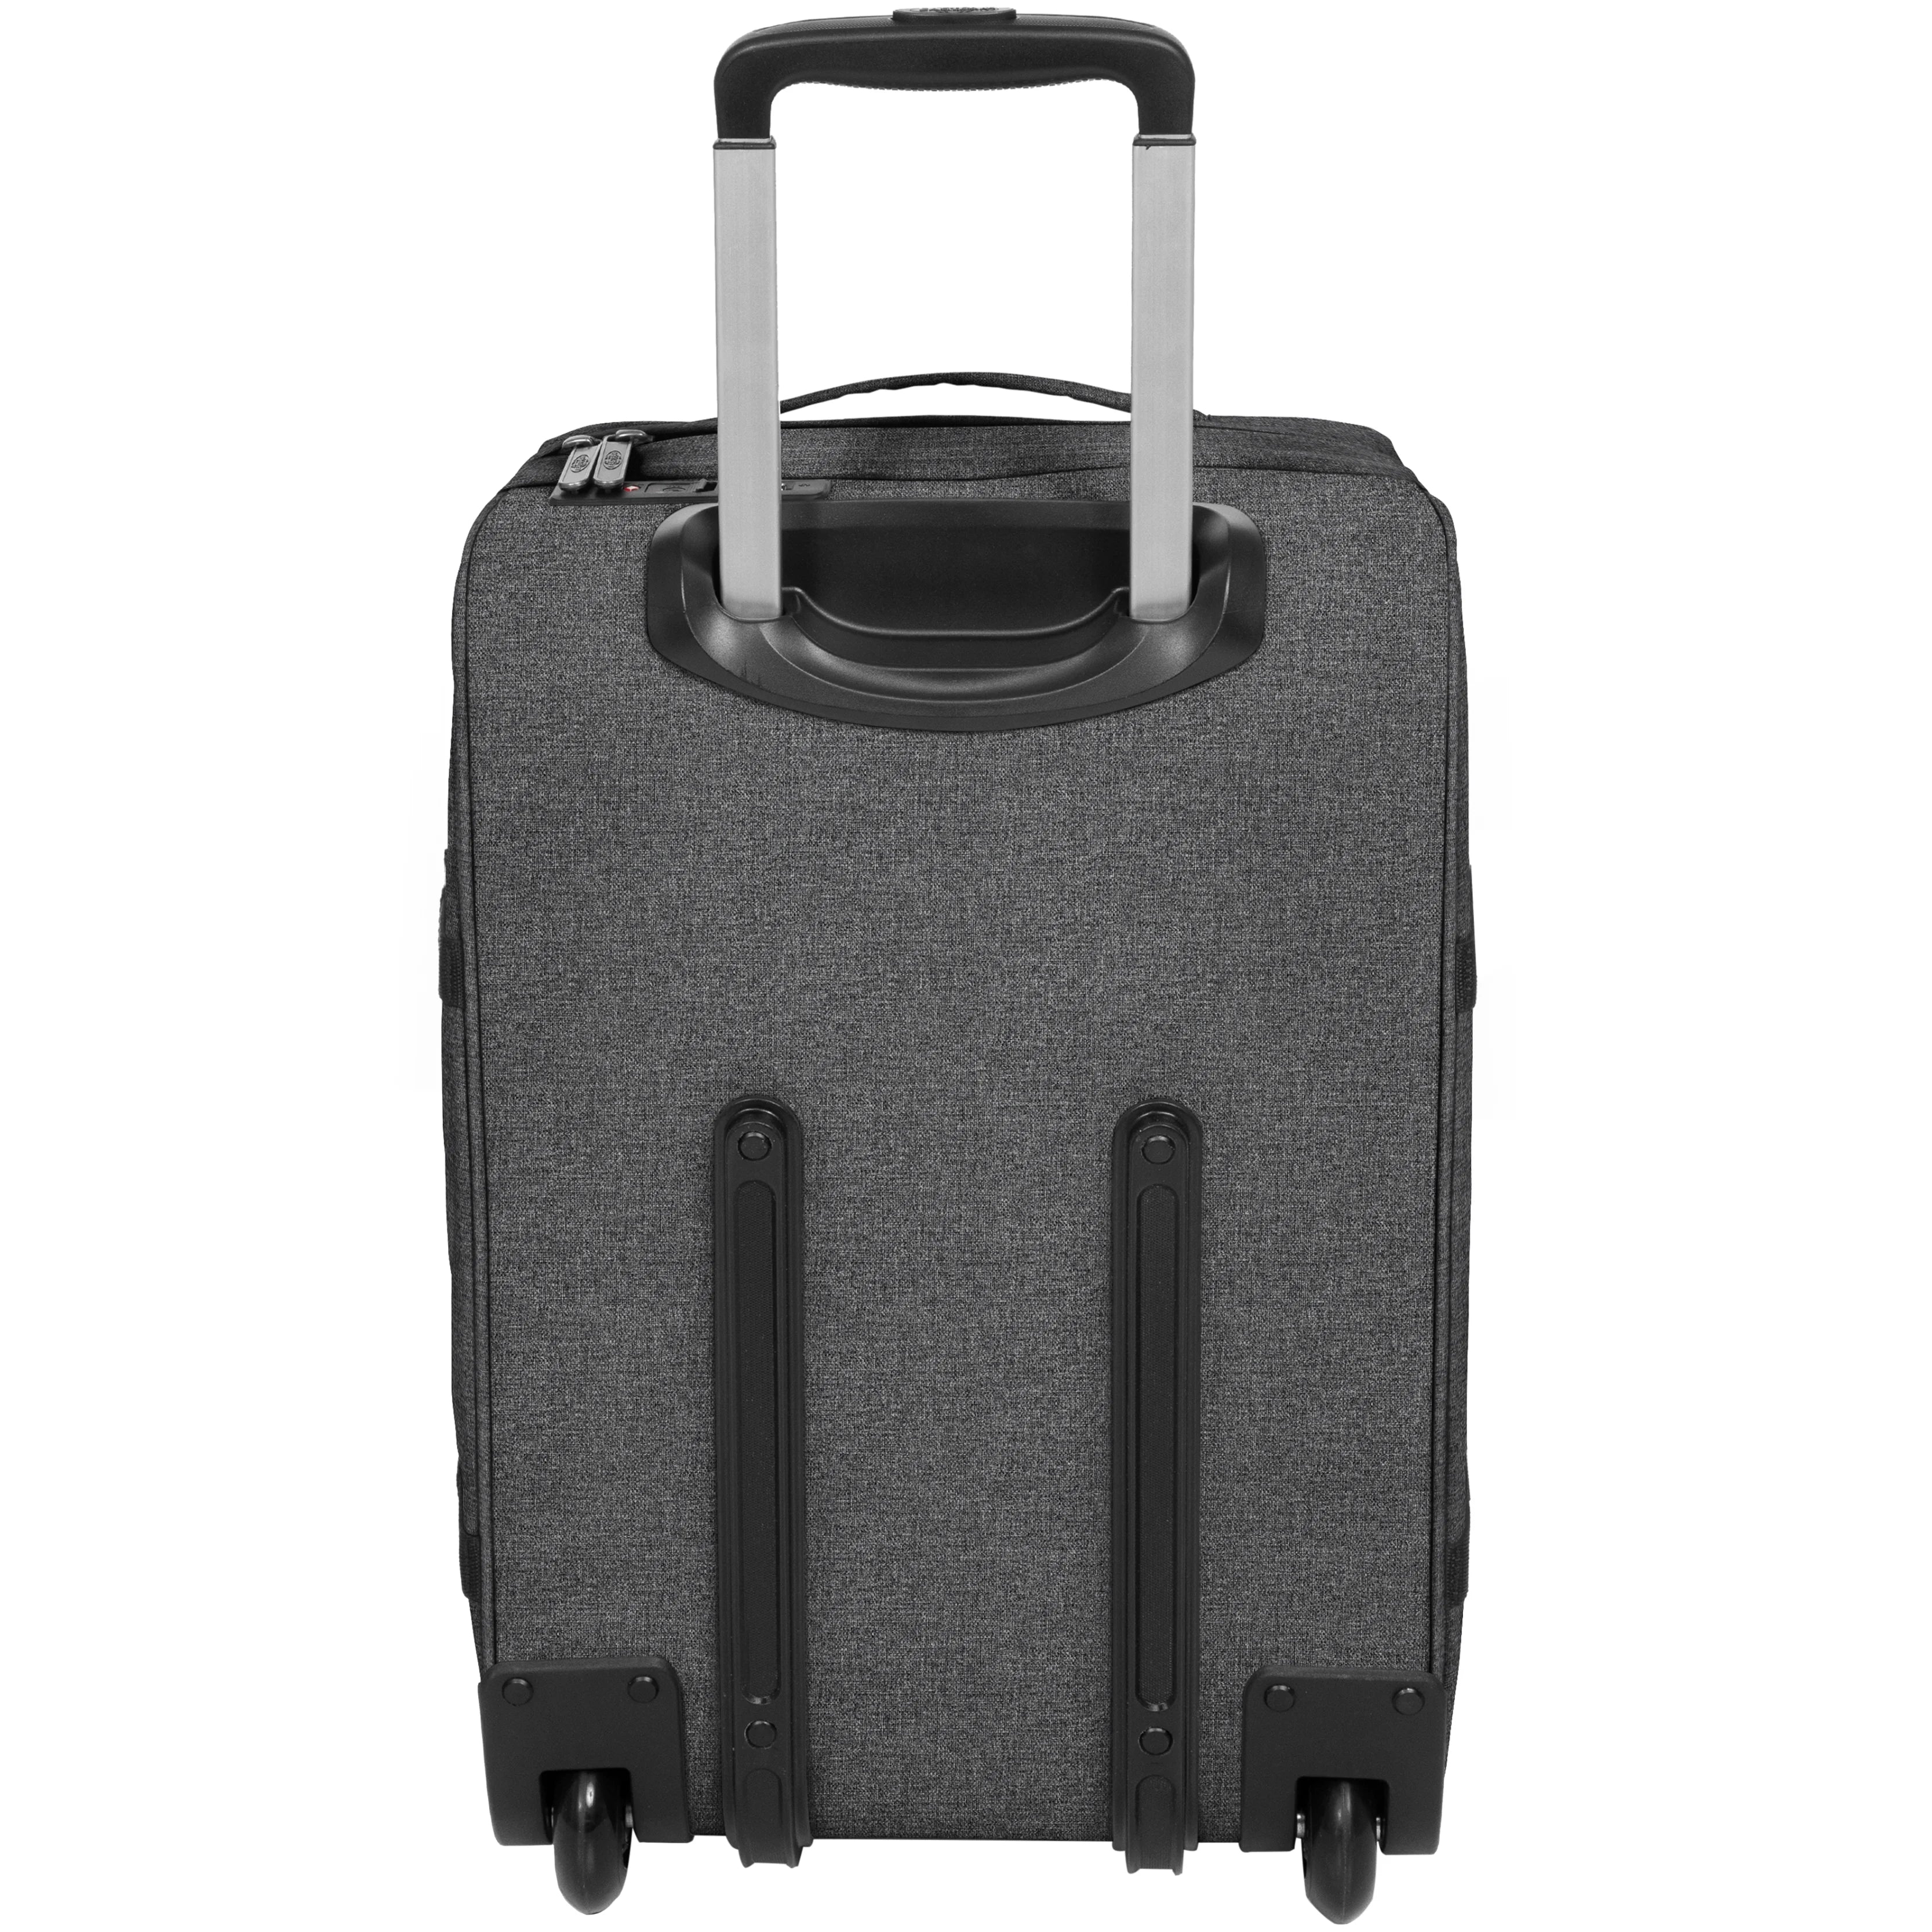 Eastpak Authentic Travel Transit'r S Rolling Travel Bag 51 cm - Tarp Black